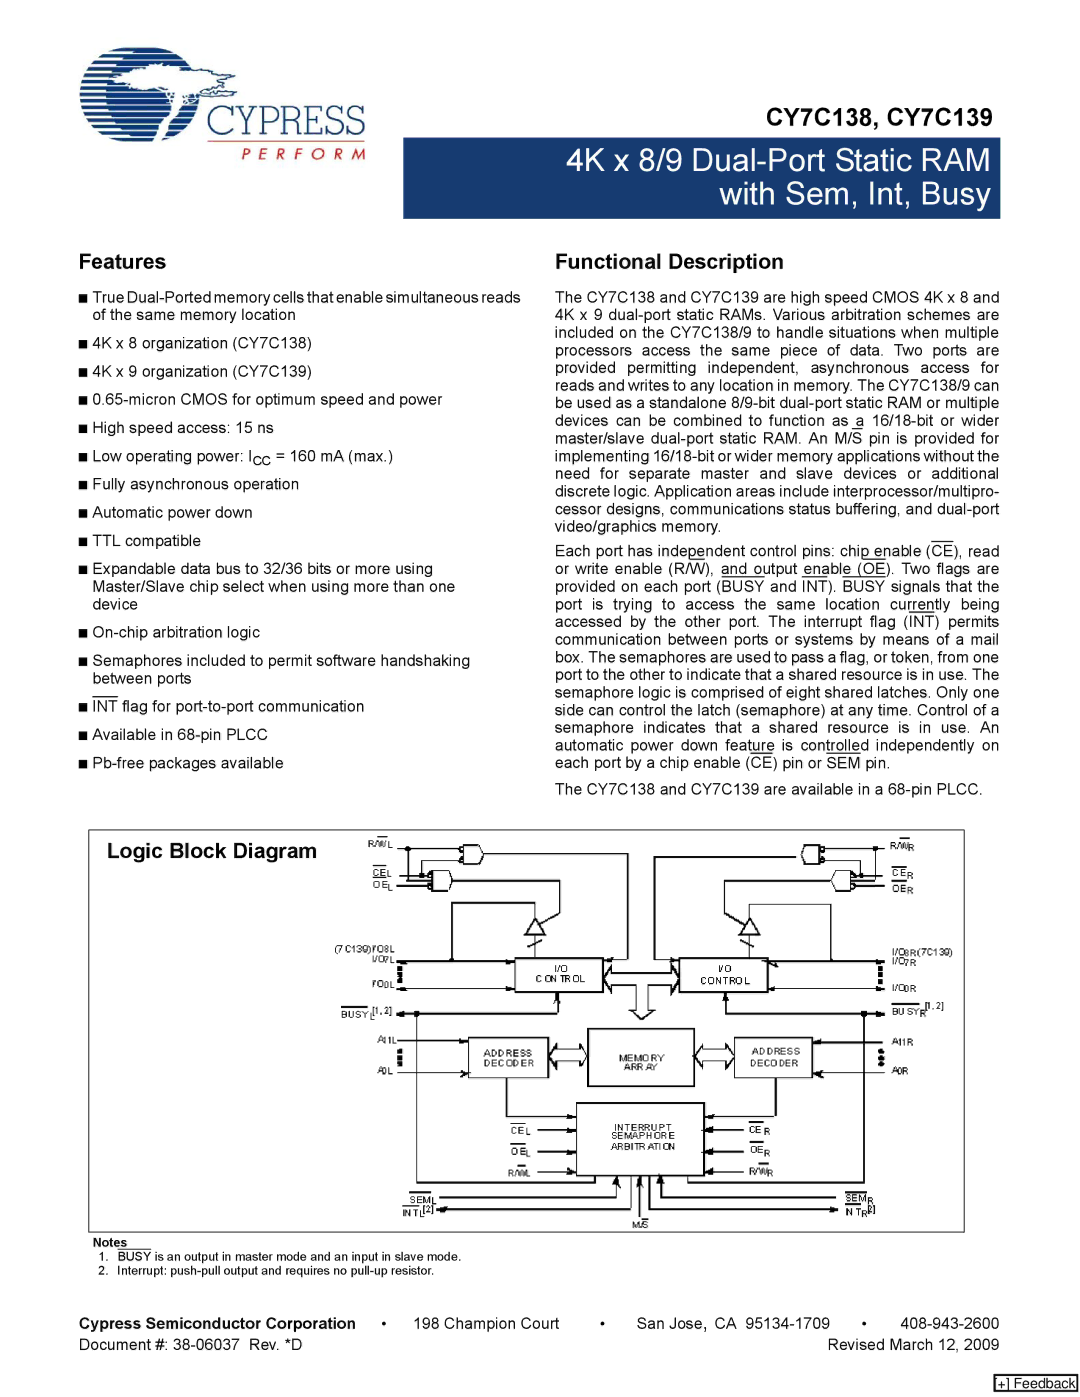 Cypress CY7C139, CY7C138 manual Features, Functional Description, Logic Block Diagram 